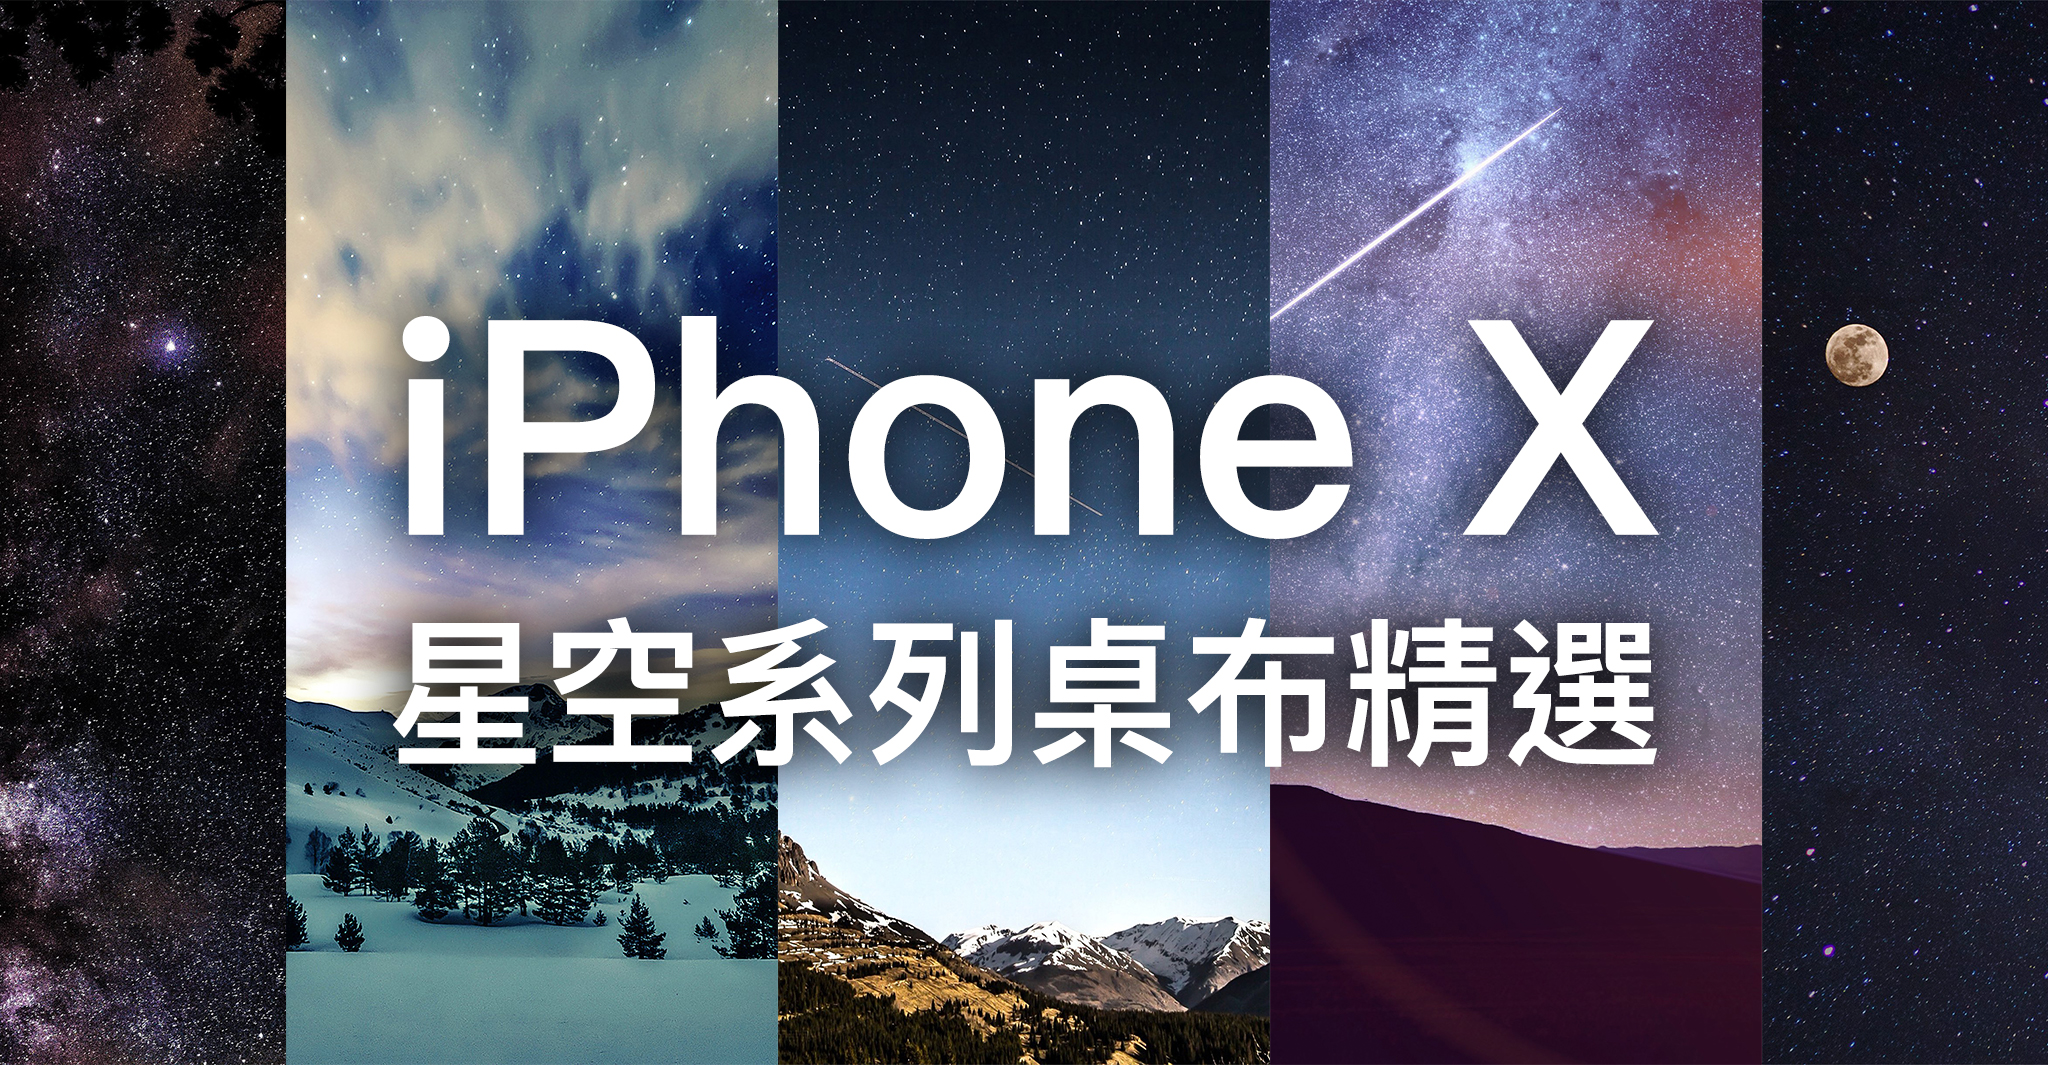 Iphone X 桌布下載 精選 張星空系列iphone X 桌布 蘋果仁 果仁iphone Ios 好物推薦科技媒體